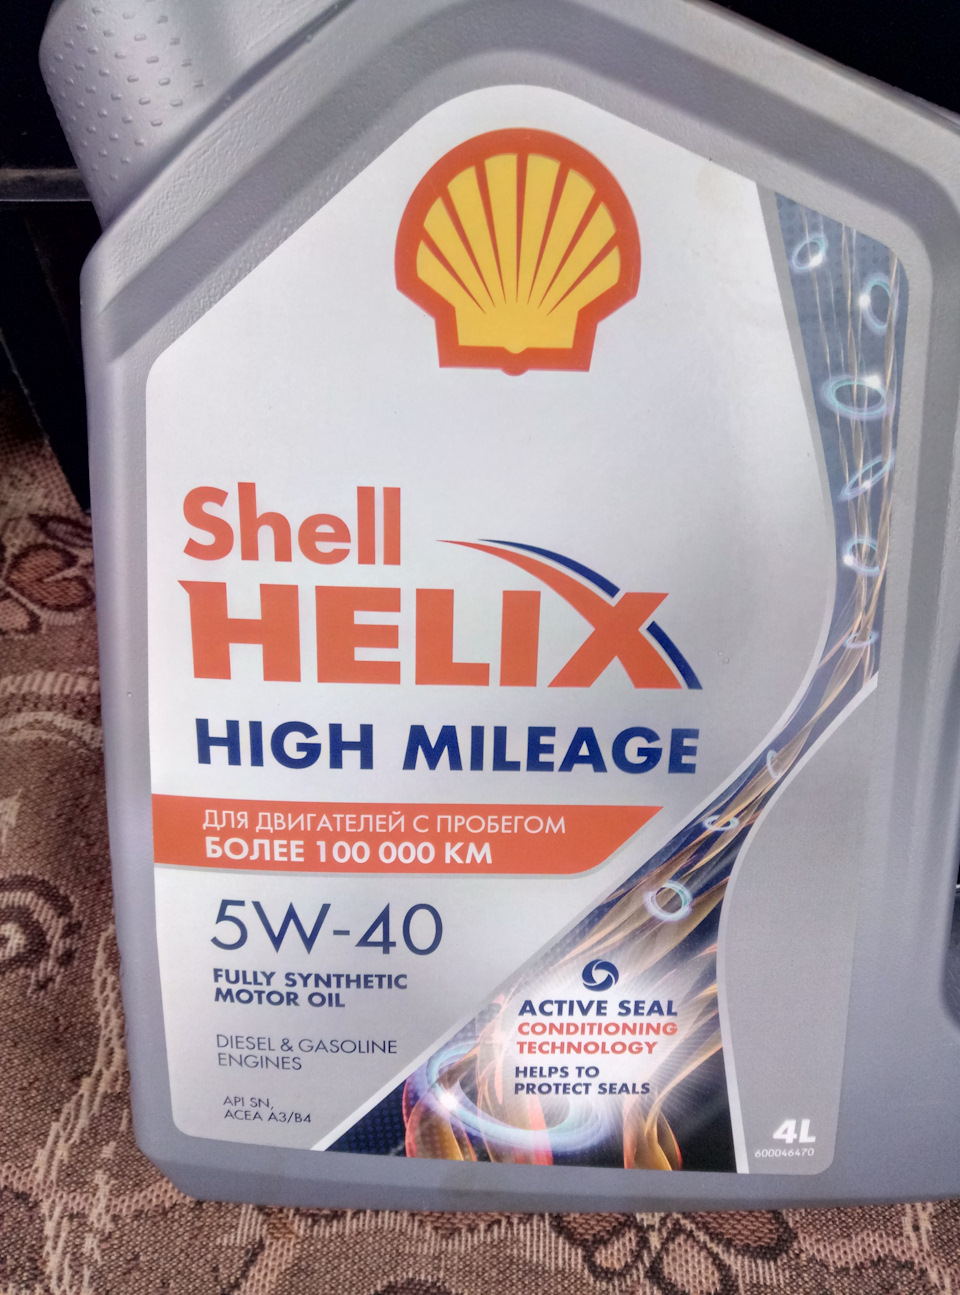 Shell helix high. Shell Helix High Mileage 5w-40. Shell Helix High Mileage 5w-40 синтетическое 4 л. Масло Шелл Хеликс 5w40 High Mileage допуск. Шелл Хеликс для двигателей с пробегом более 100000.